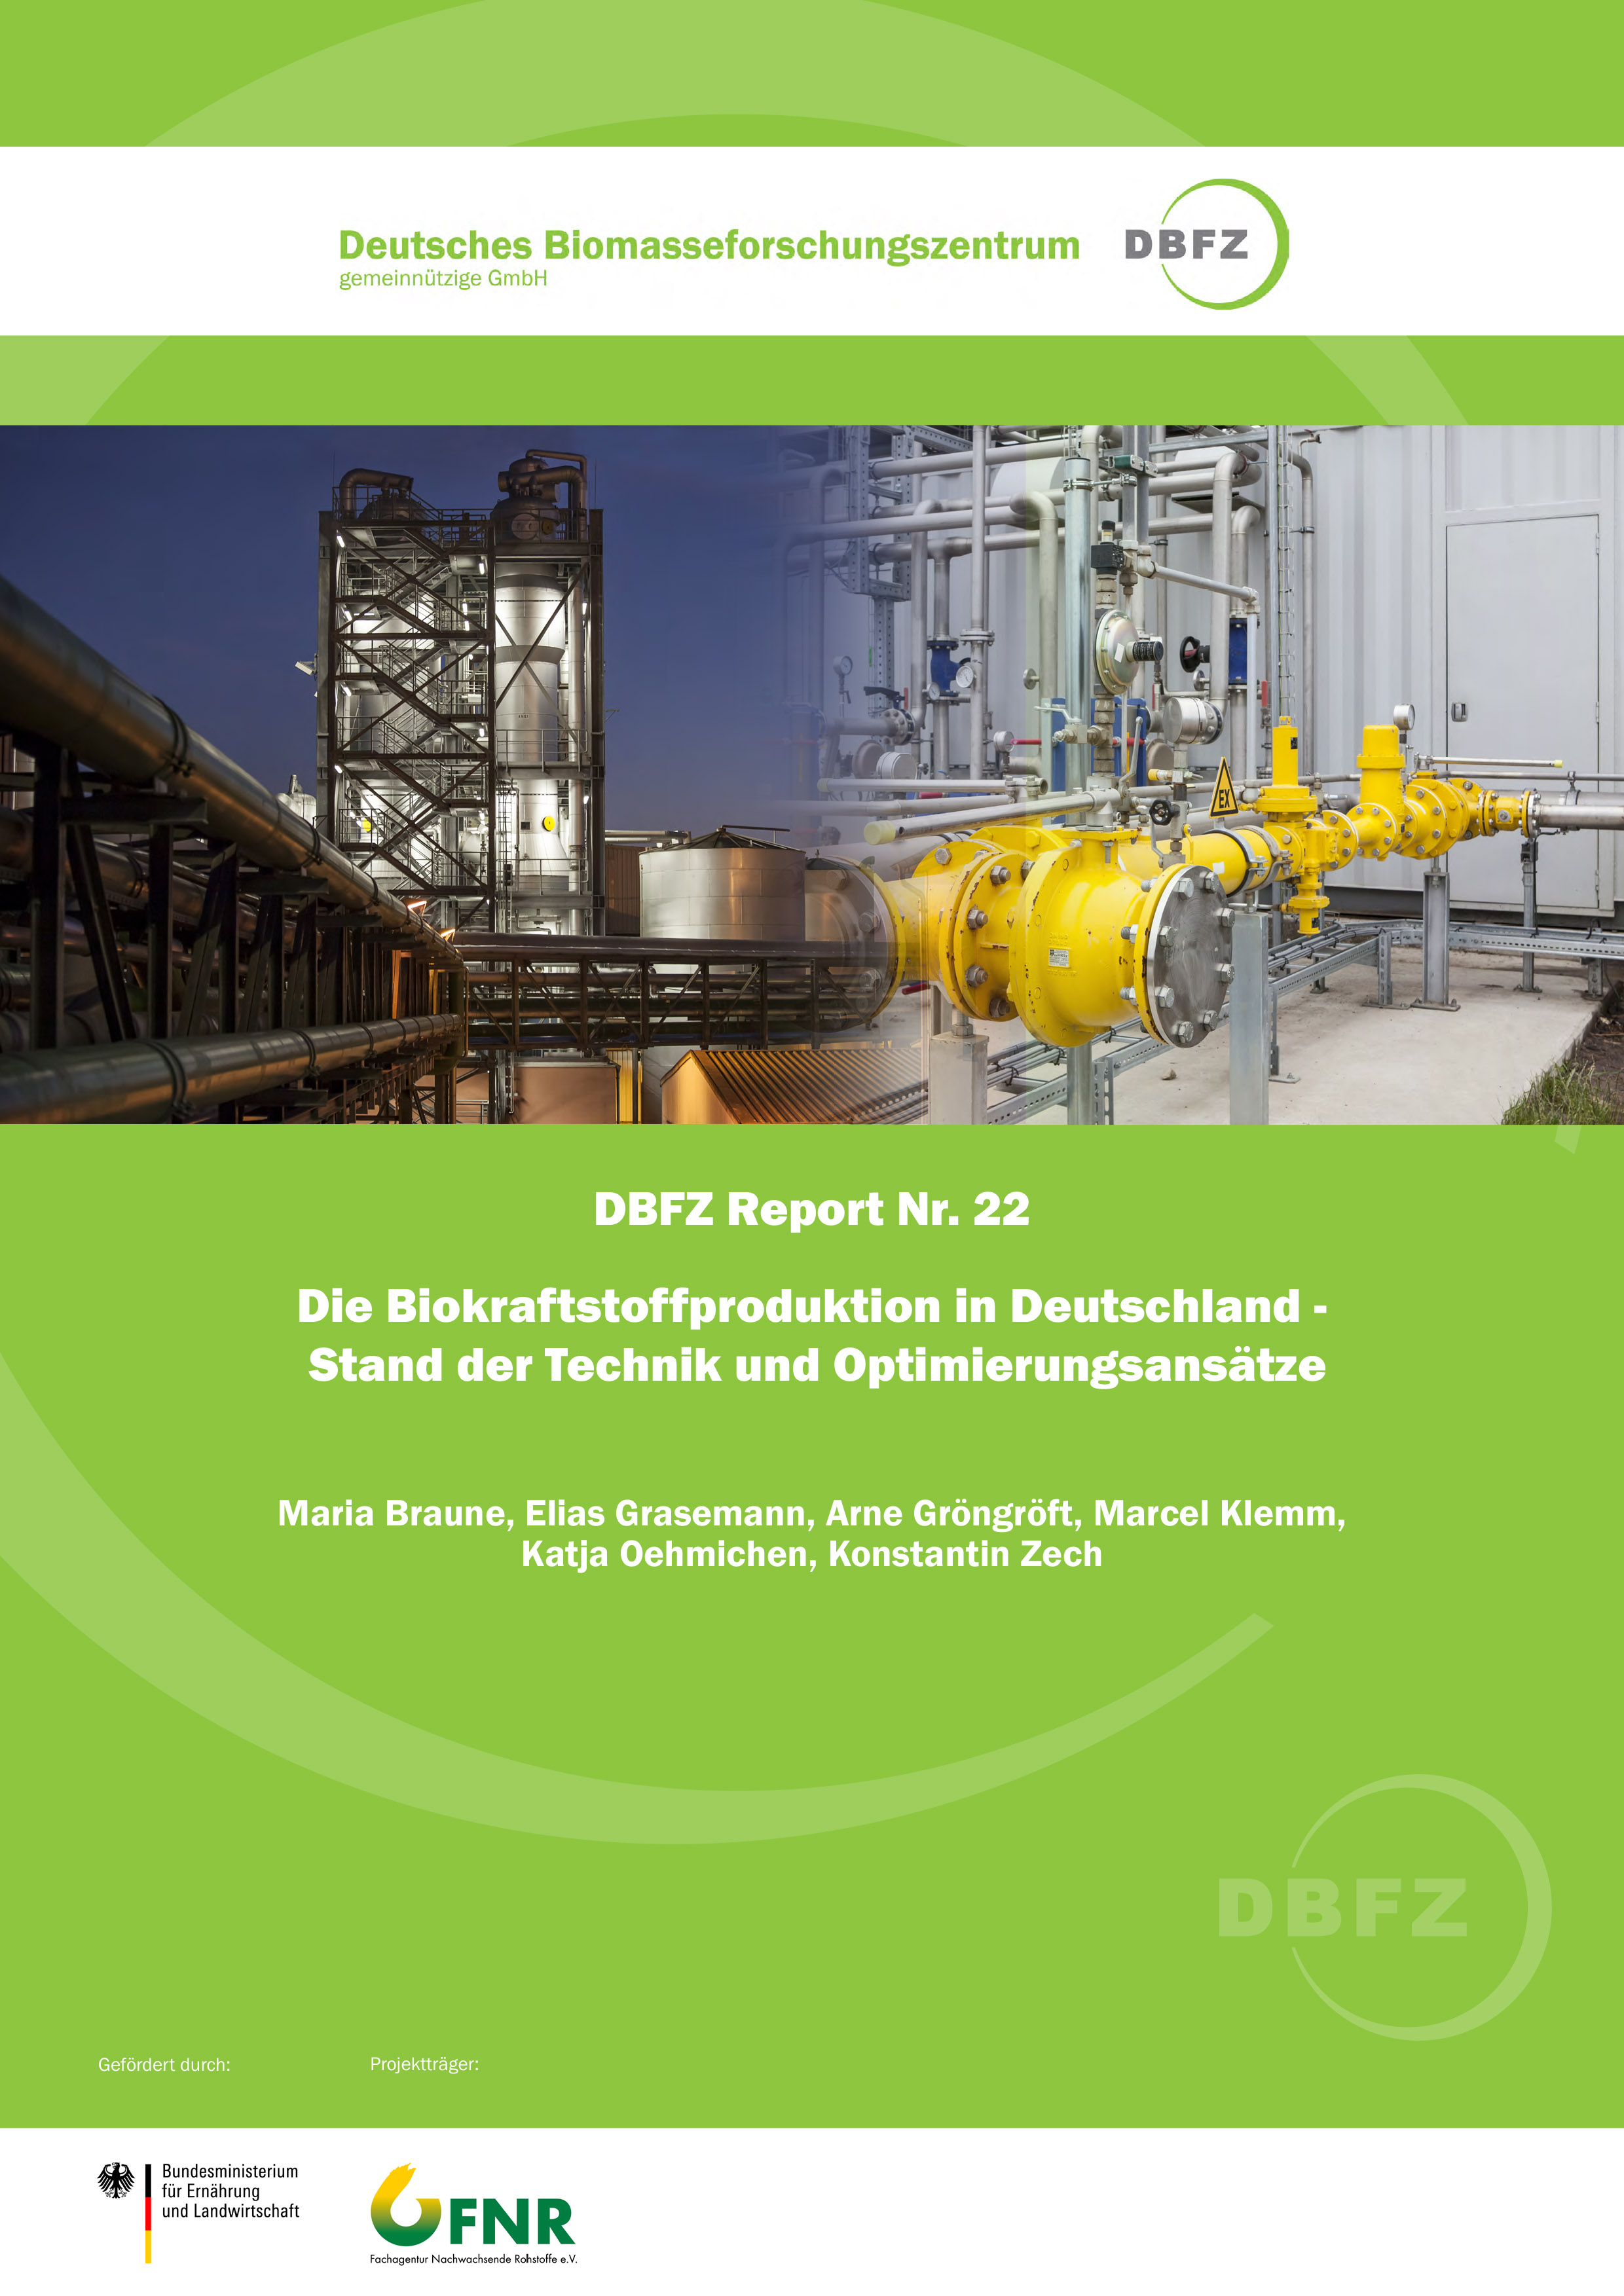 DBFZ Report No. 22